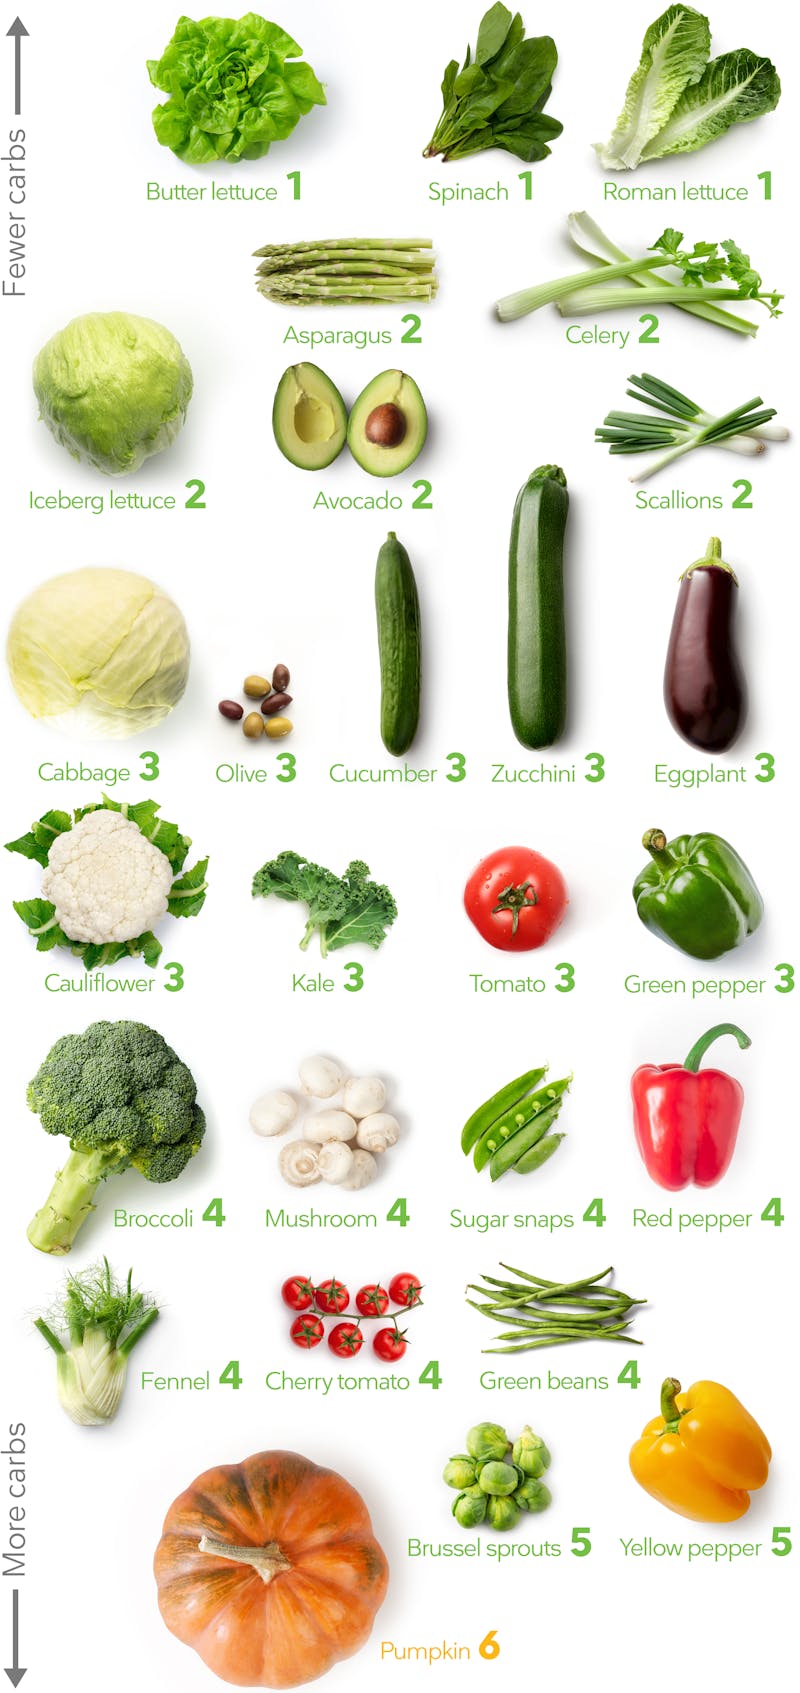 Calories Per 100 Grams Of Vegetables - Best Vegetable In The World